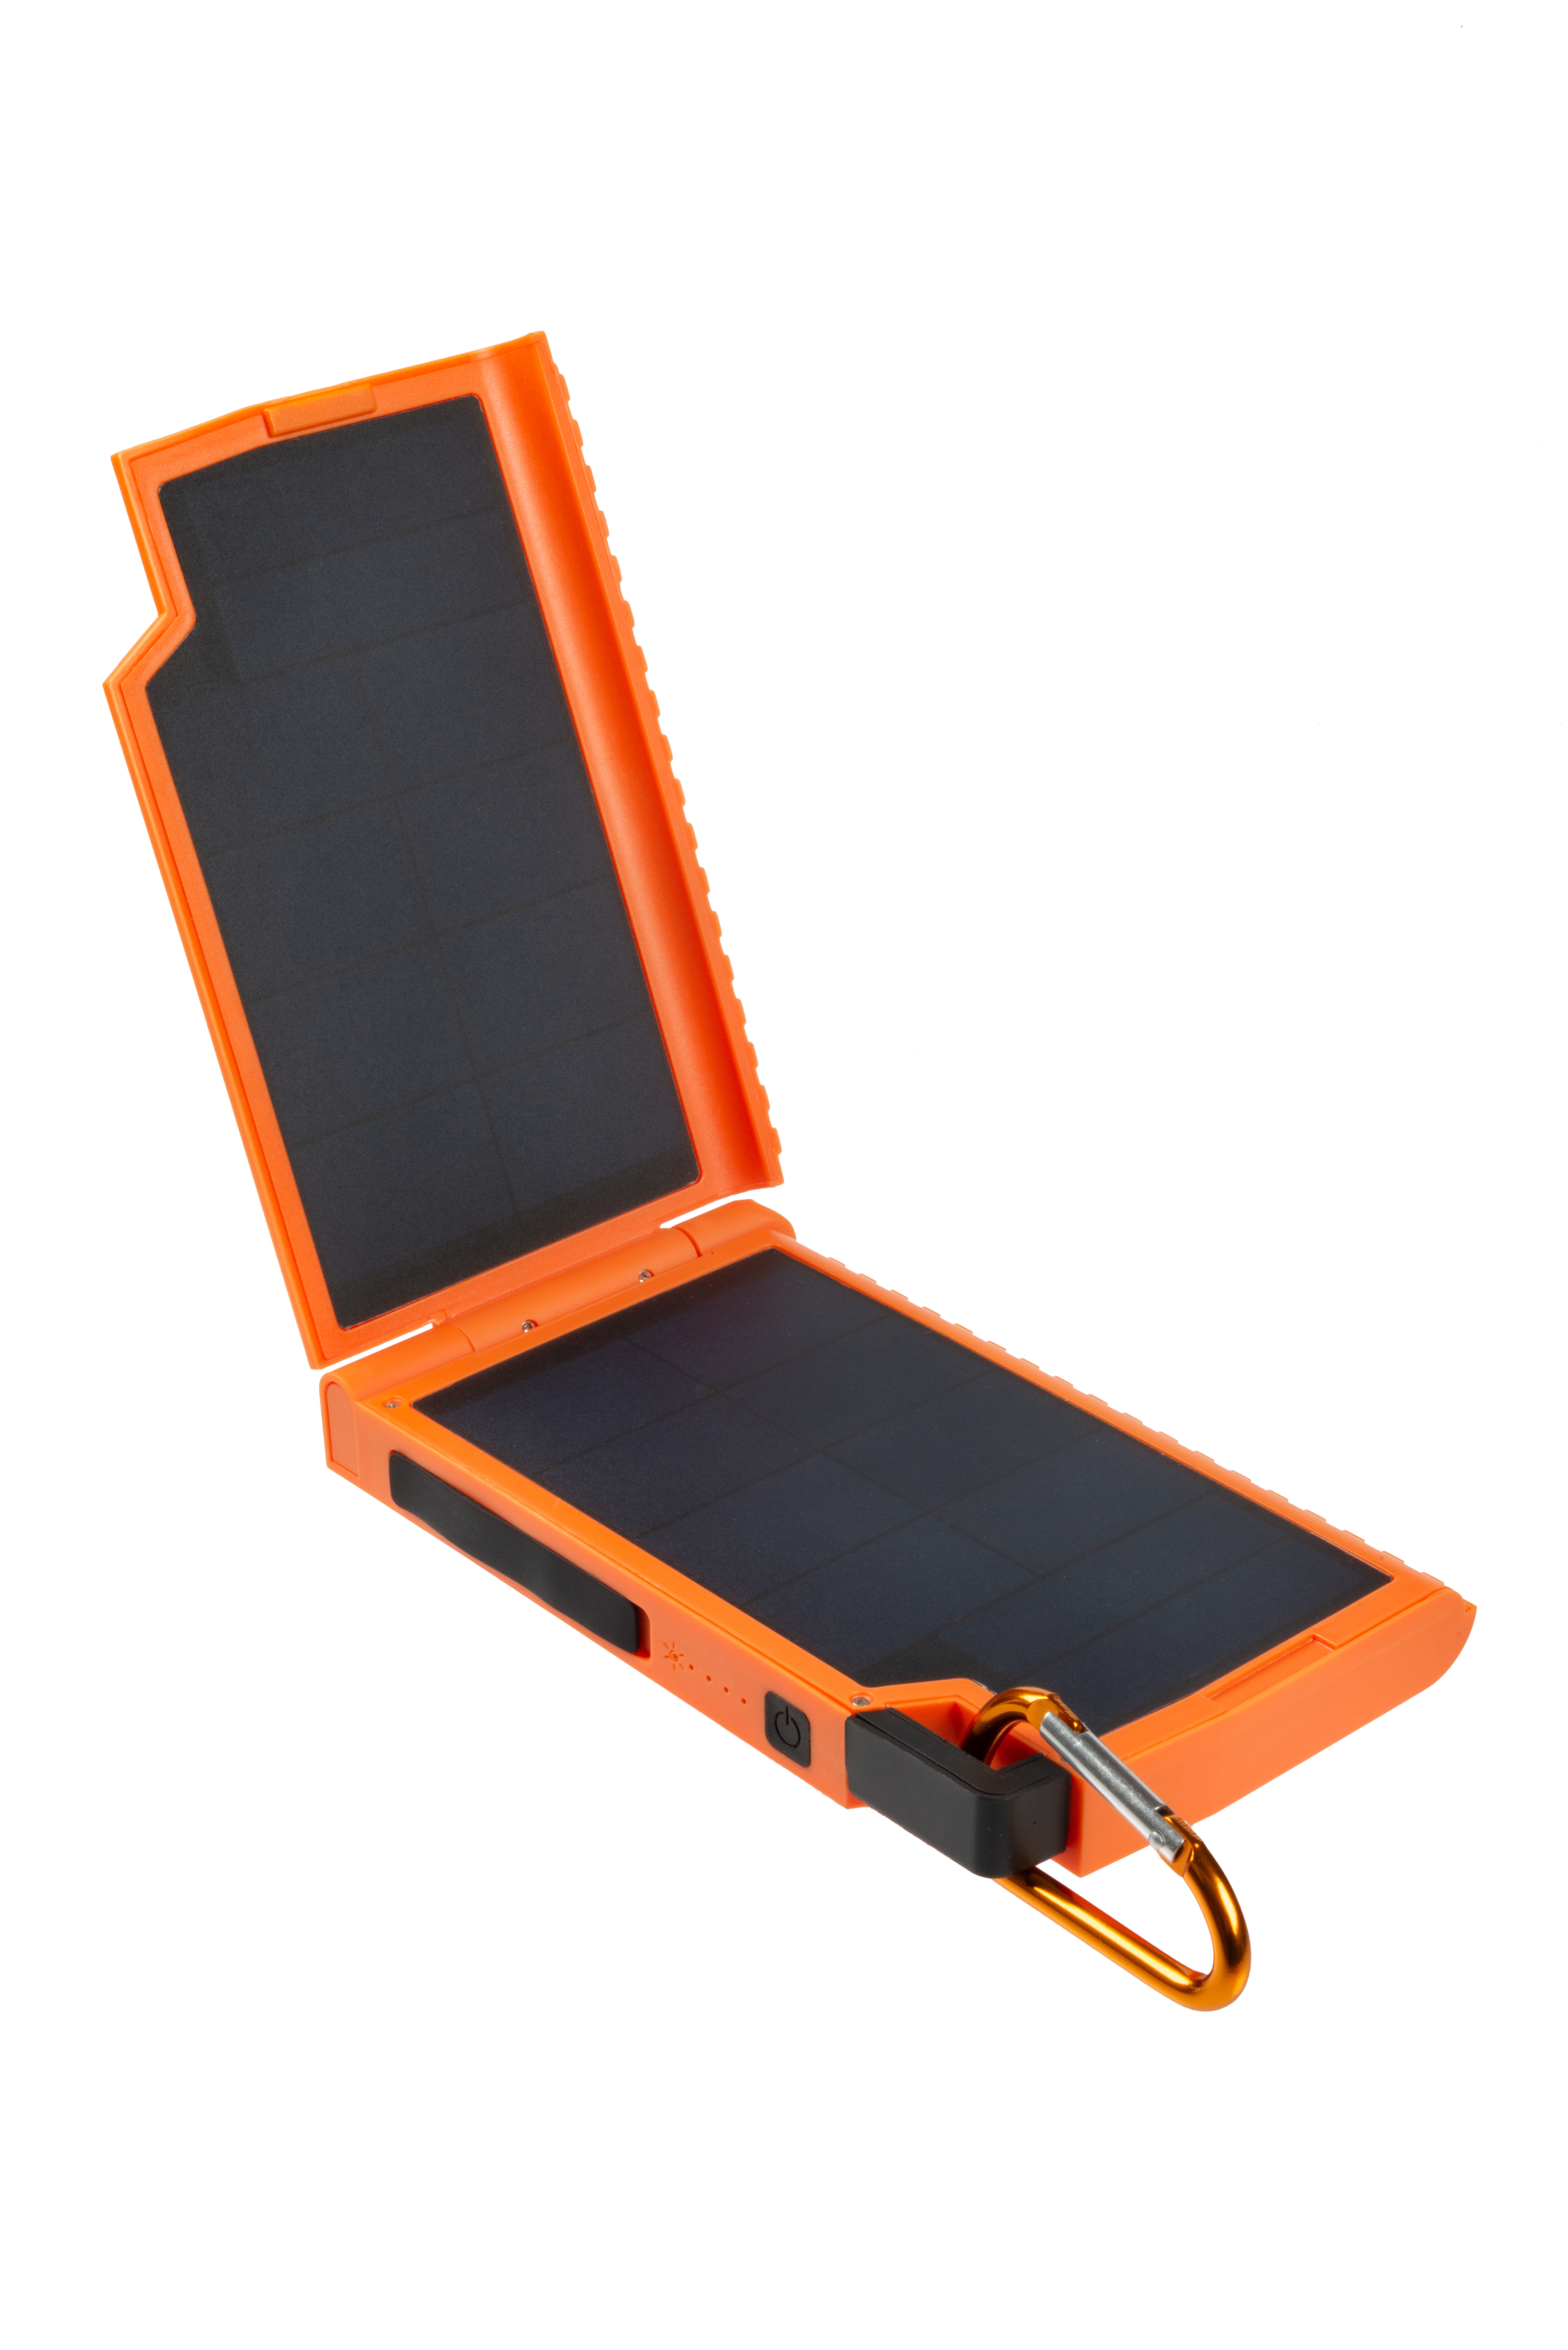 Xtorm XR105 basstationer Litium Polymer (LiPo) 10000 mAh Orange